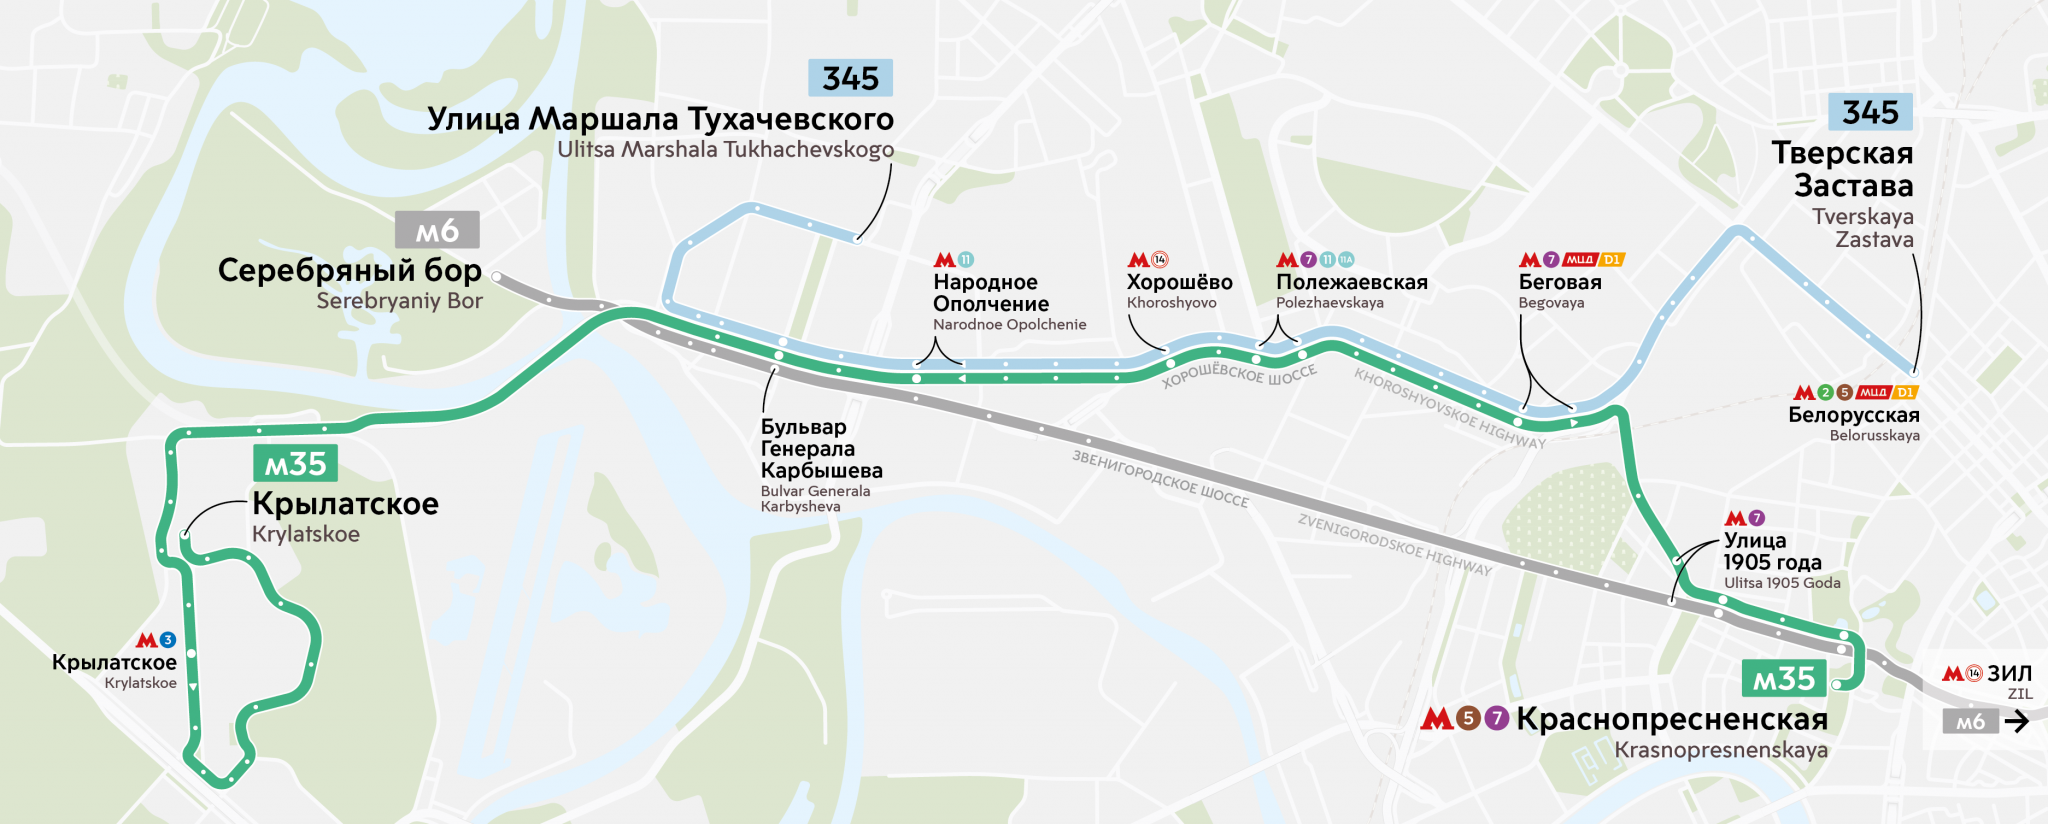 Маршрут м35 автобуса Москва. Схема автобусов МСК. М3 маршрут автобуса Москва. Маршрут автобуса м3.